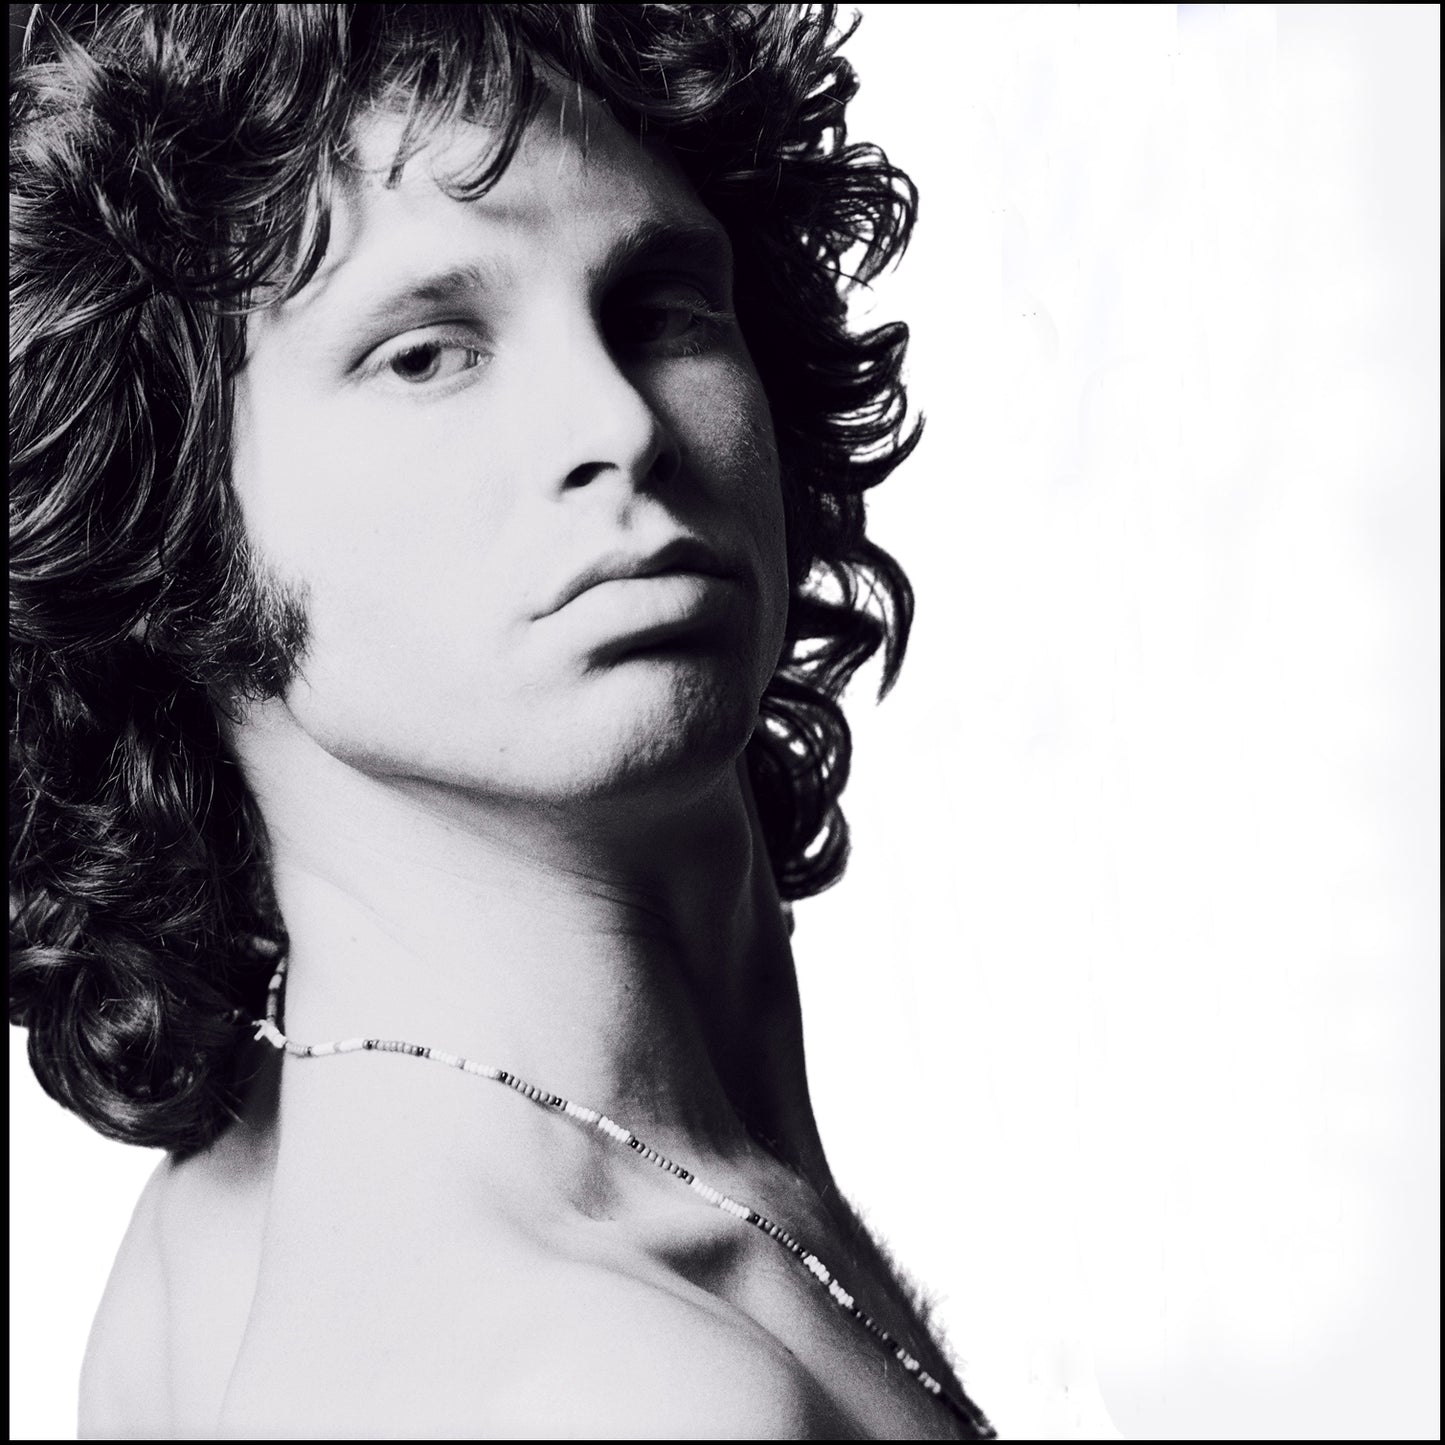 Jim Morrison, The Doors, "The Sniff" New York City, 1967 by Joel Brodsky